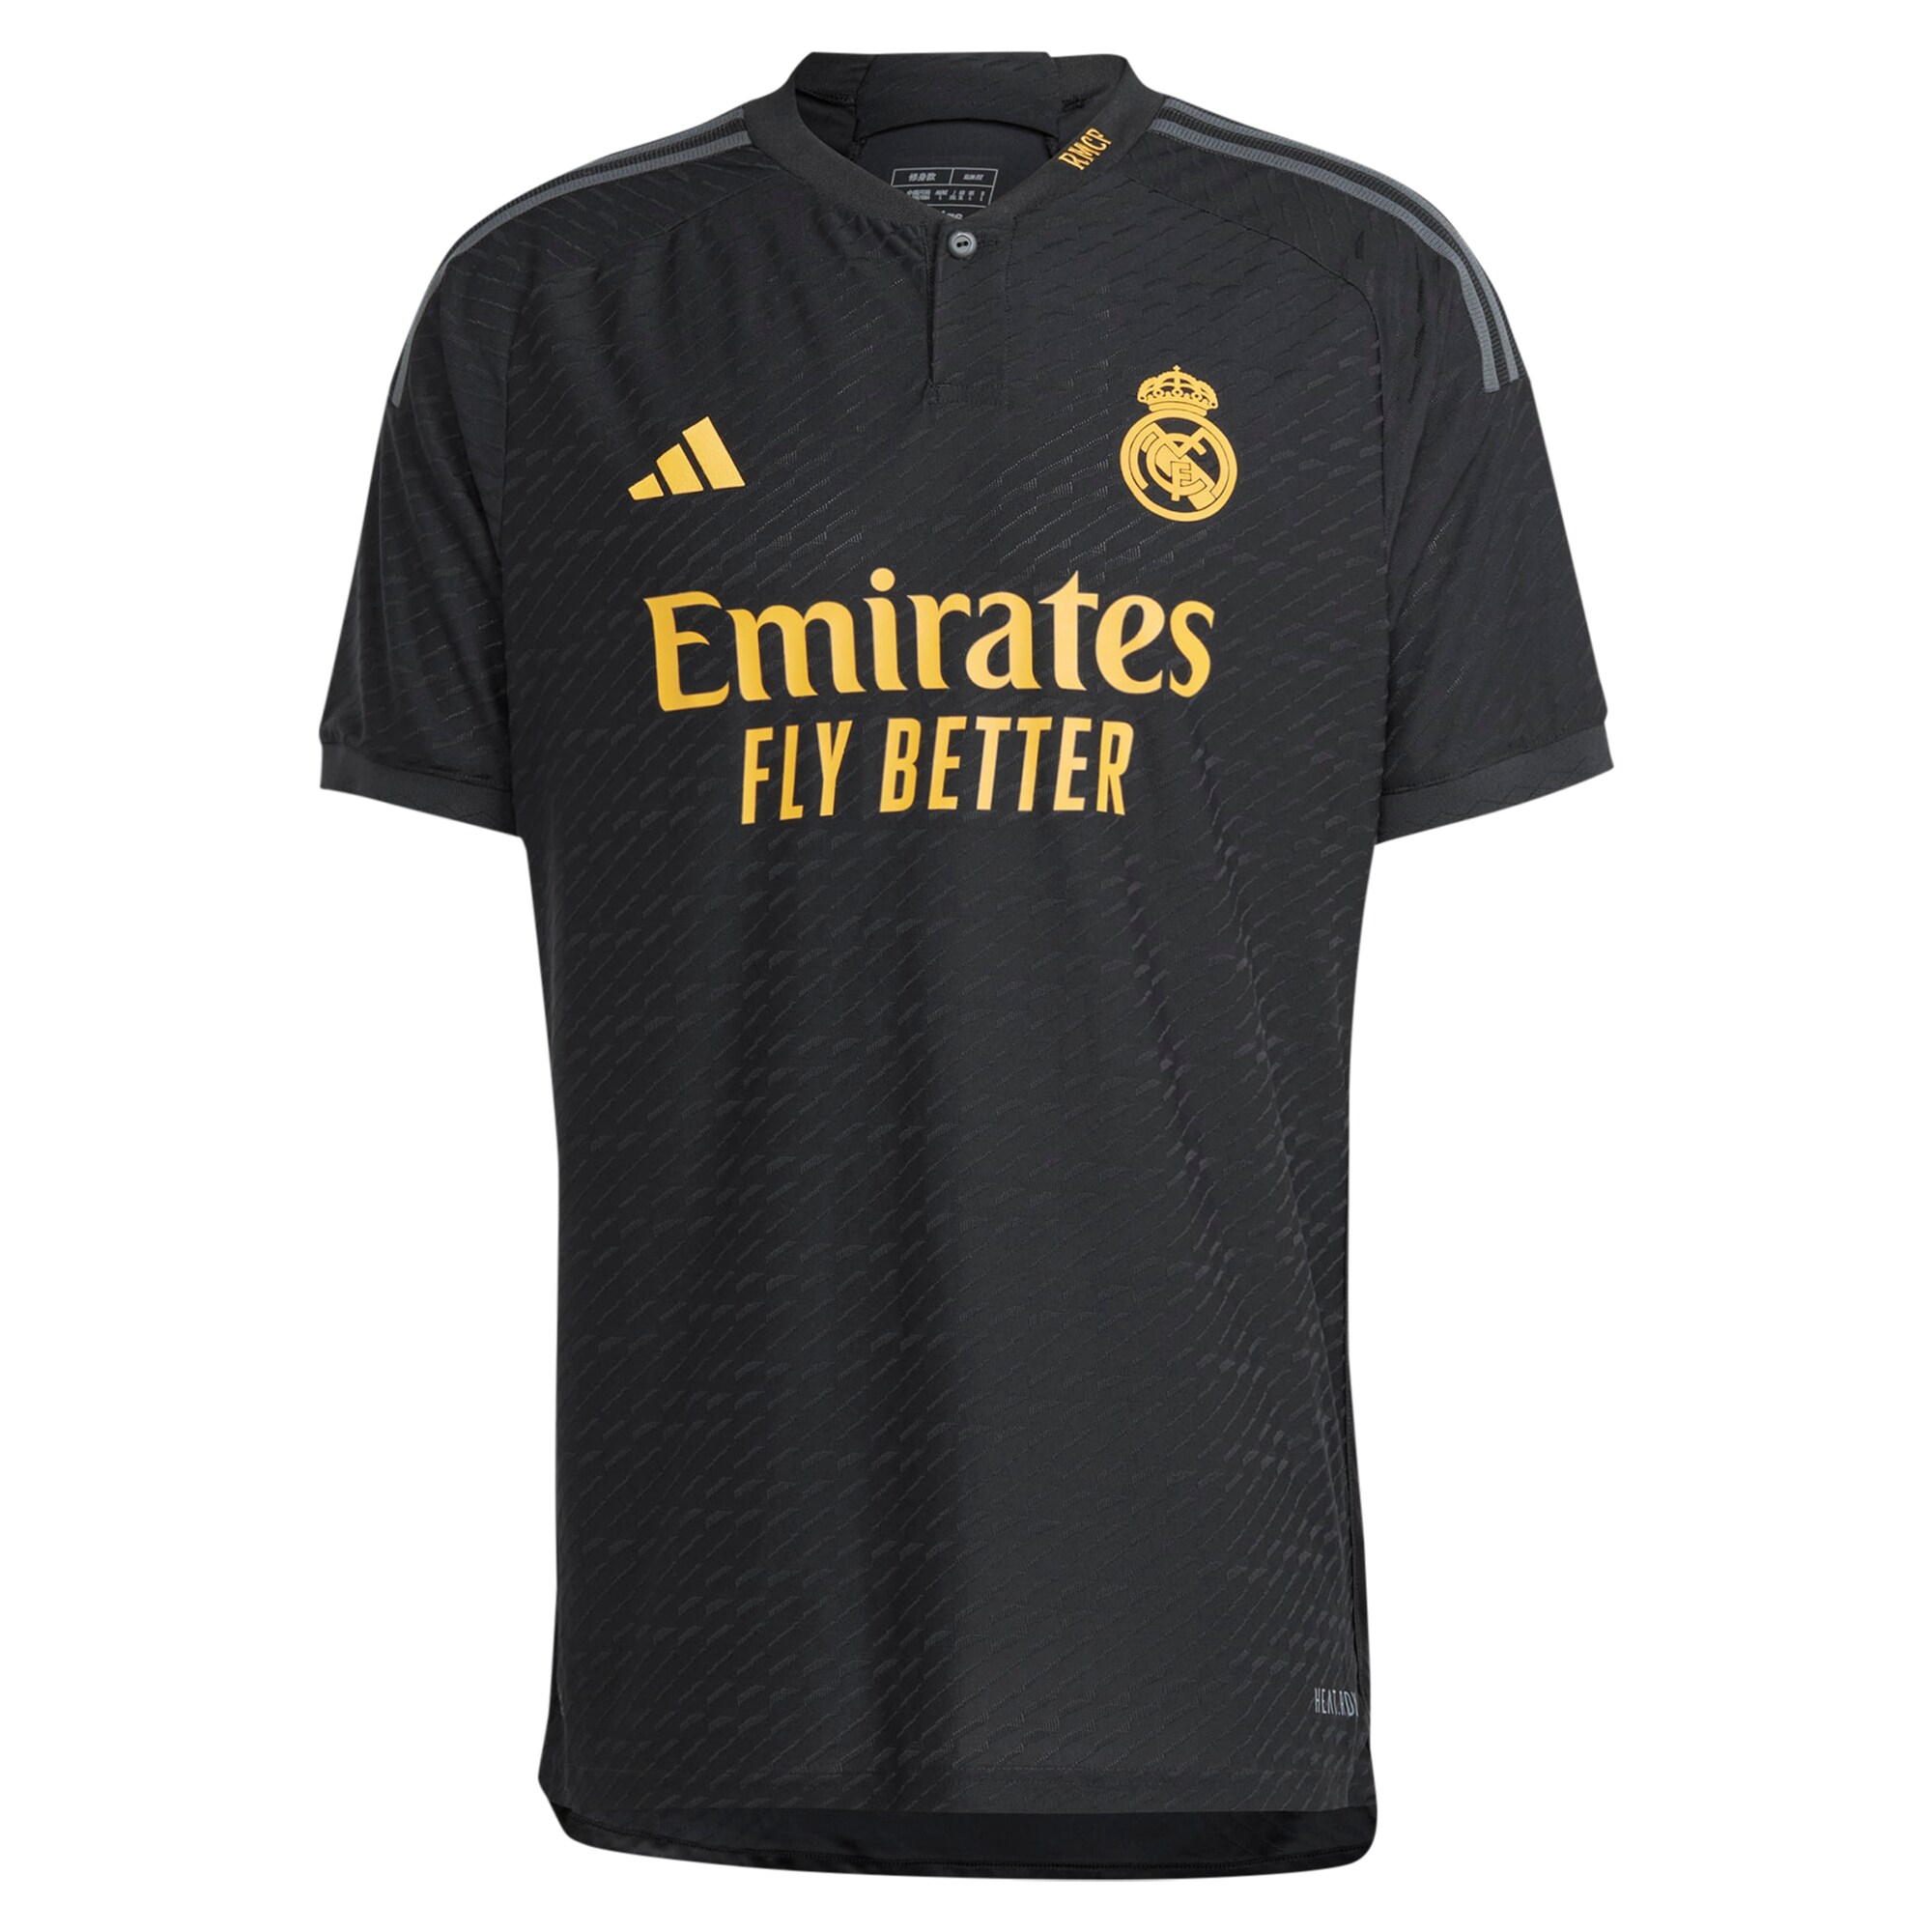 Real Madrid Third Authentic Shirt 2023-24 with Arda Güler 24 printing